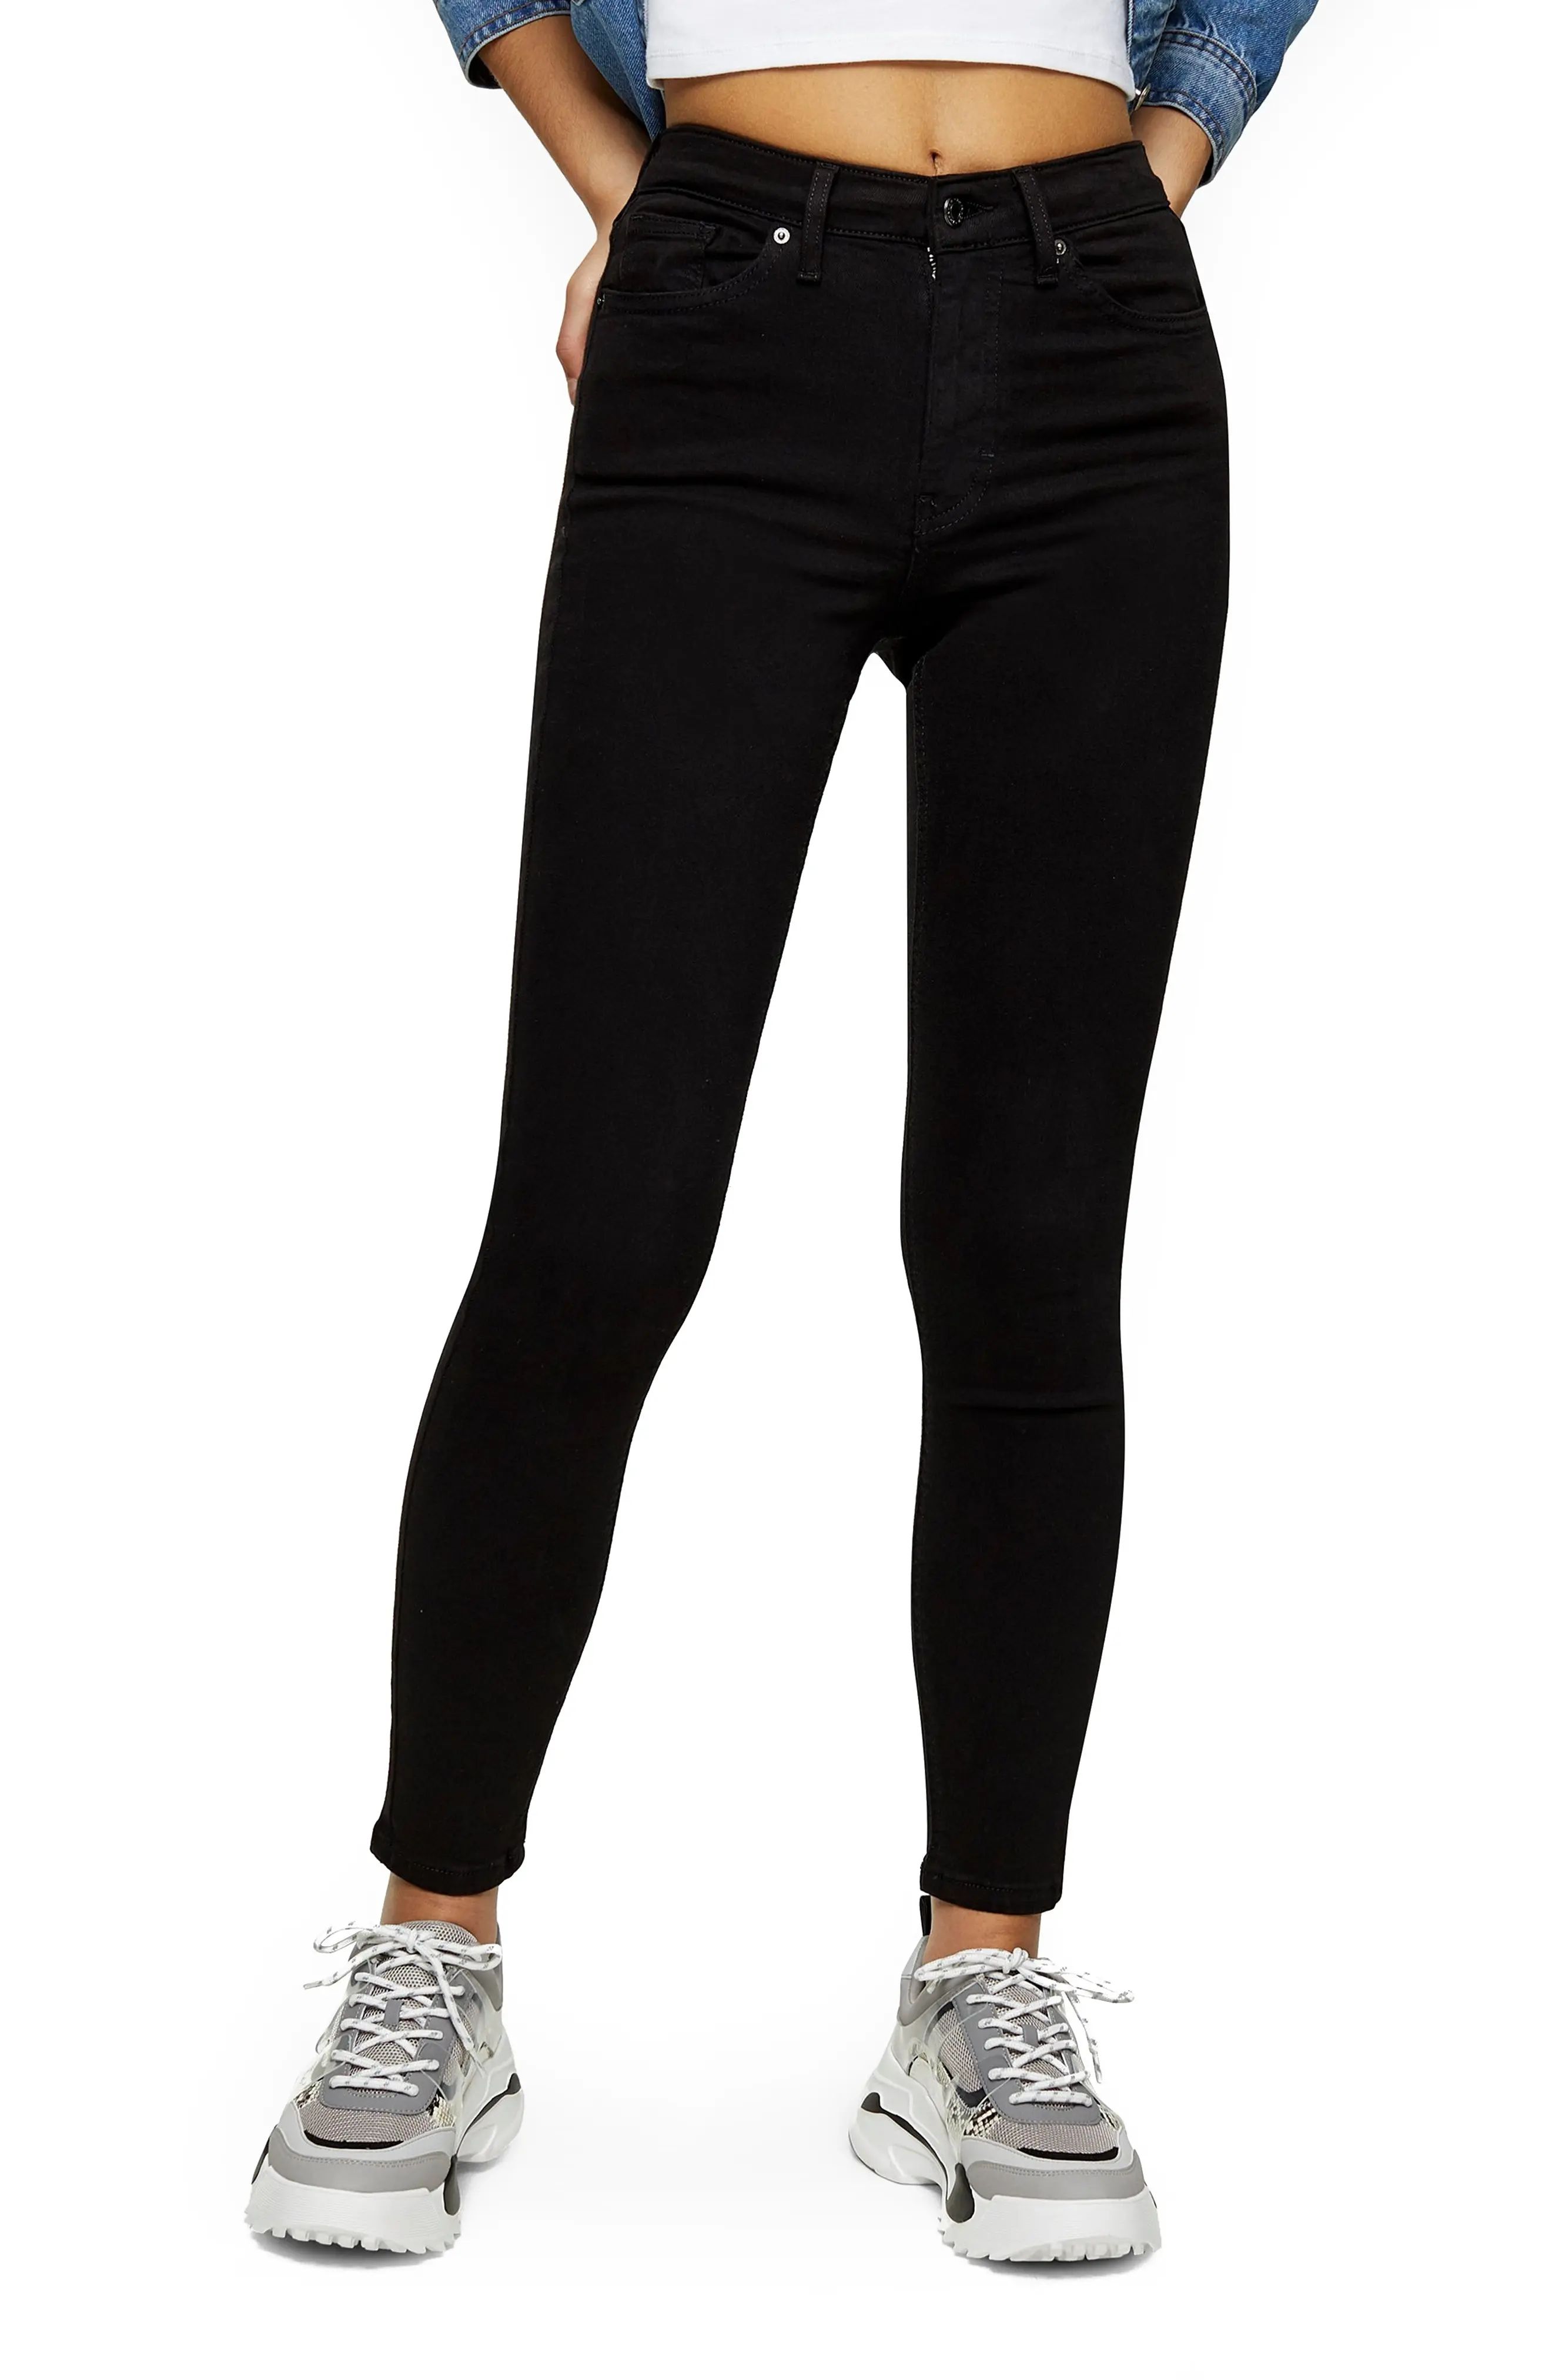 Women's Topshop Jamie High Waist Black Jeans, Size 36W x 30L - Black | Nordstrom